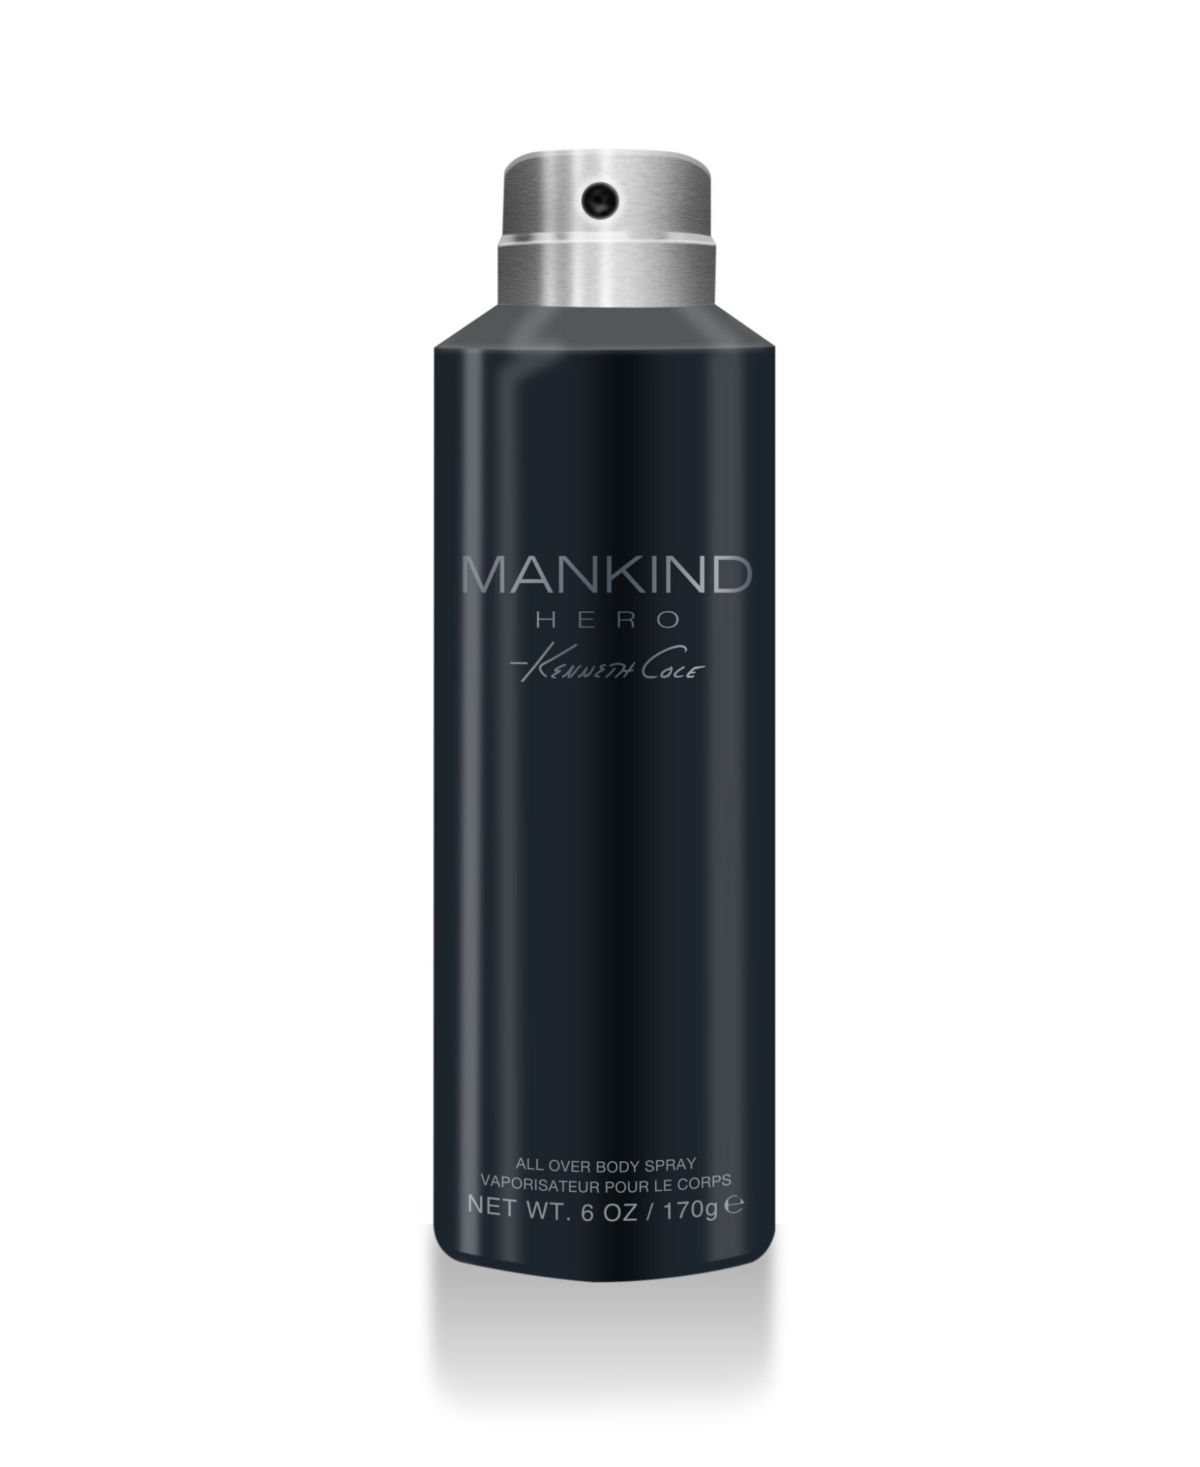 Kenneth Cole Men's Mankind Hero Body Spray, 8 oz - Black